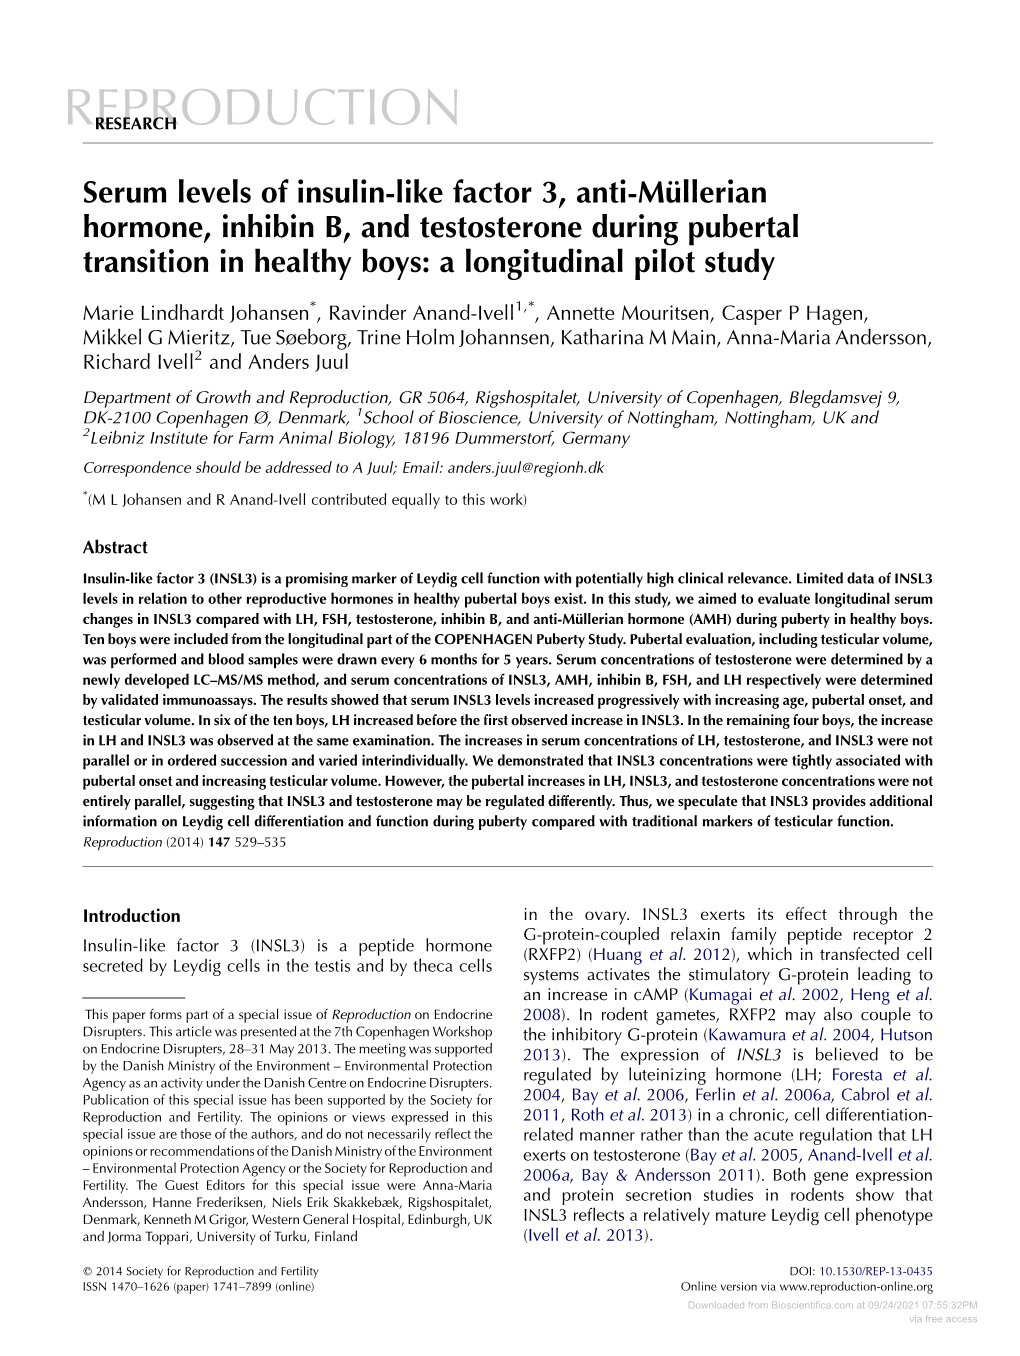 Serum Levels of Insulin-Like Factor 3, Anti-Müllerian Hormone, Inhibin B